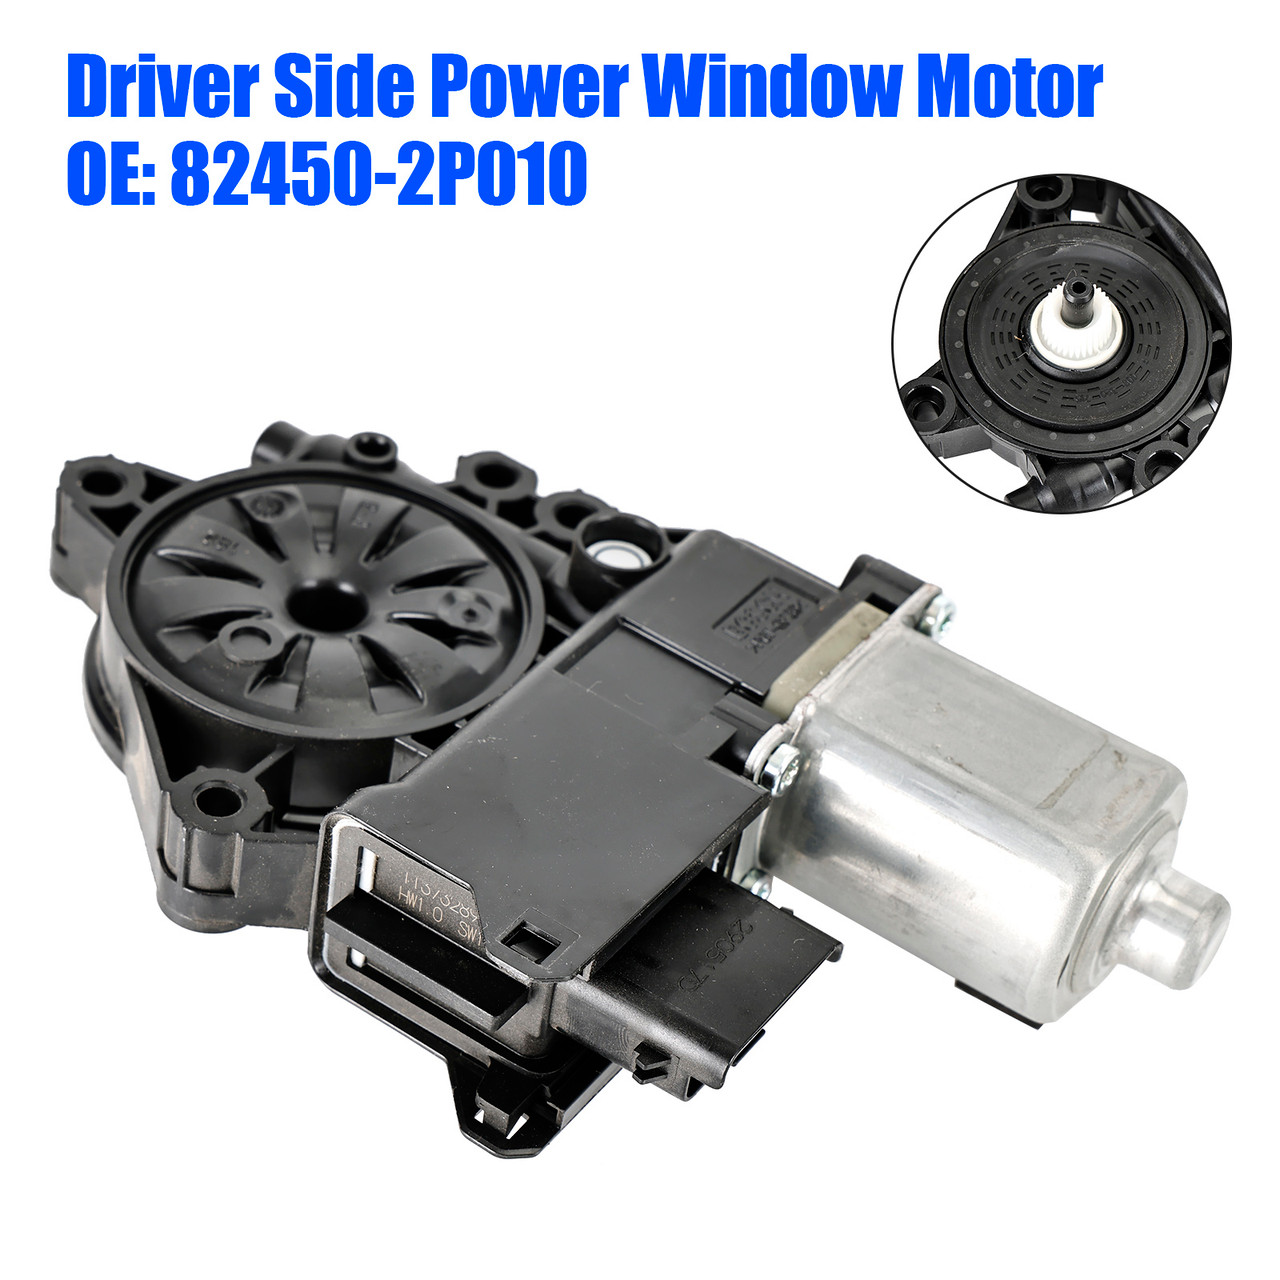 Front Driver Side Power Window Motor for Kia Sorento 2011-2015 82450-2P010